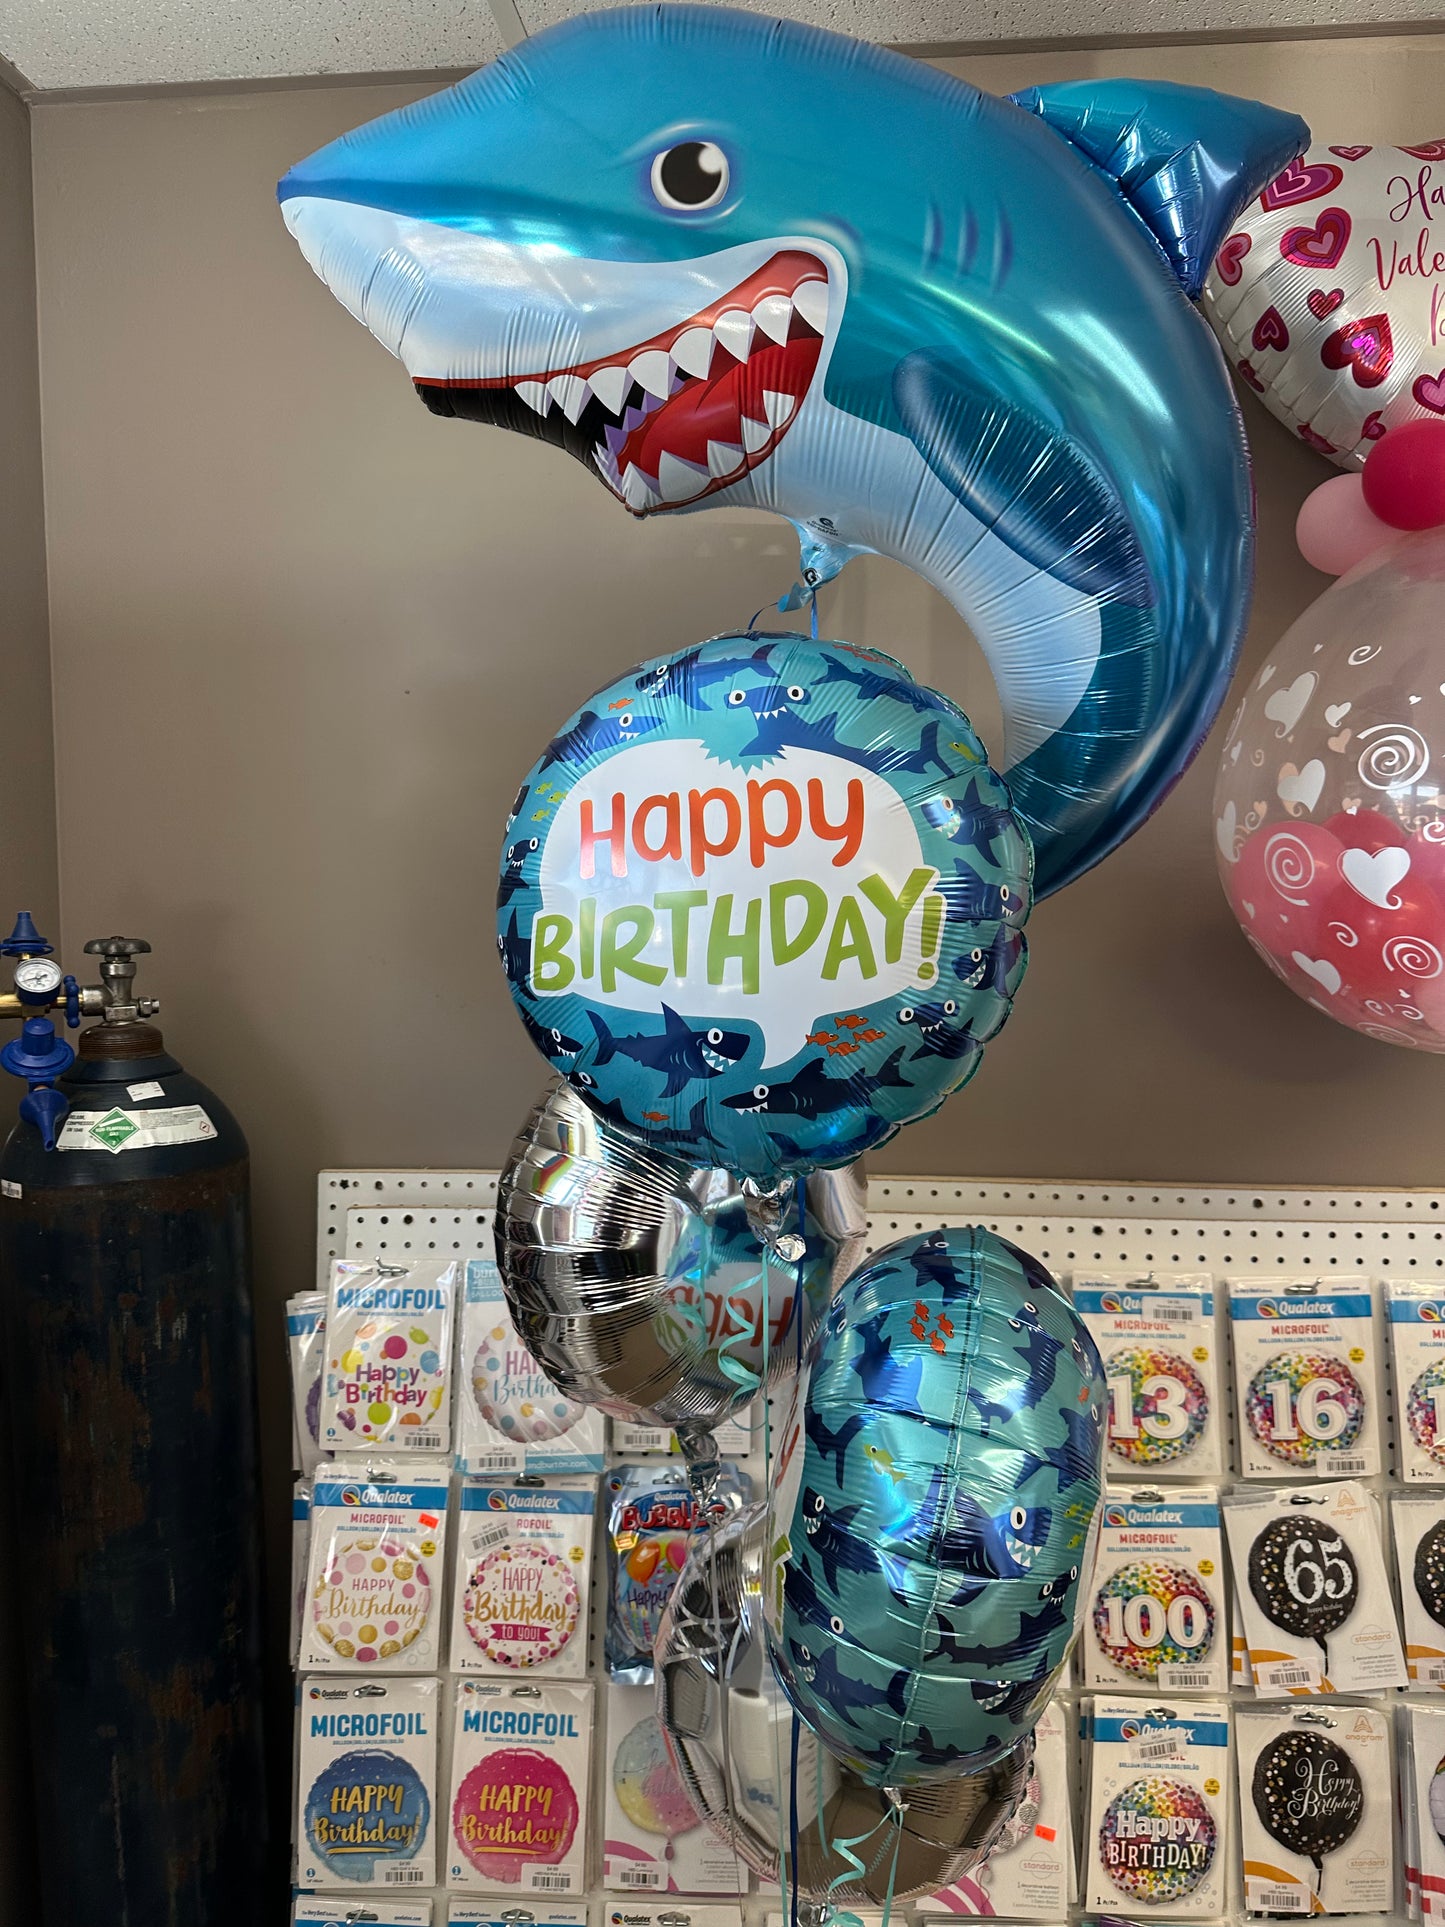 Happy Birthday - Fun Sharks